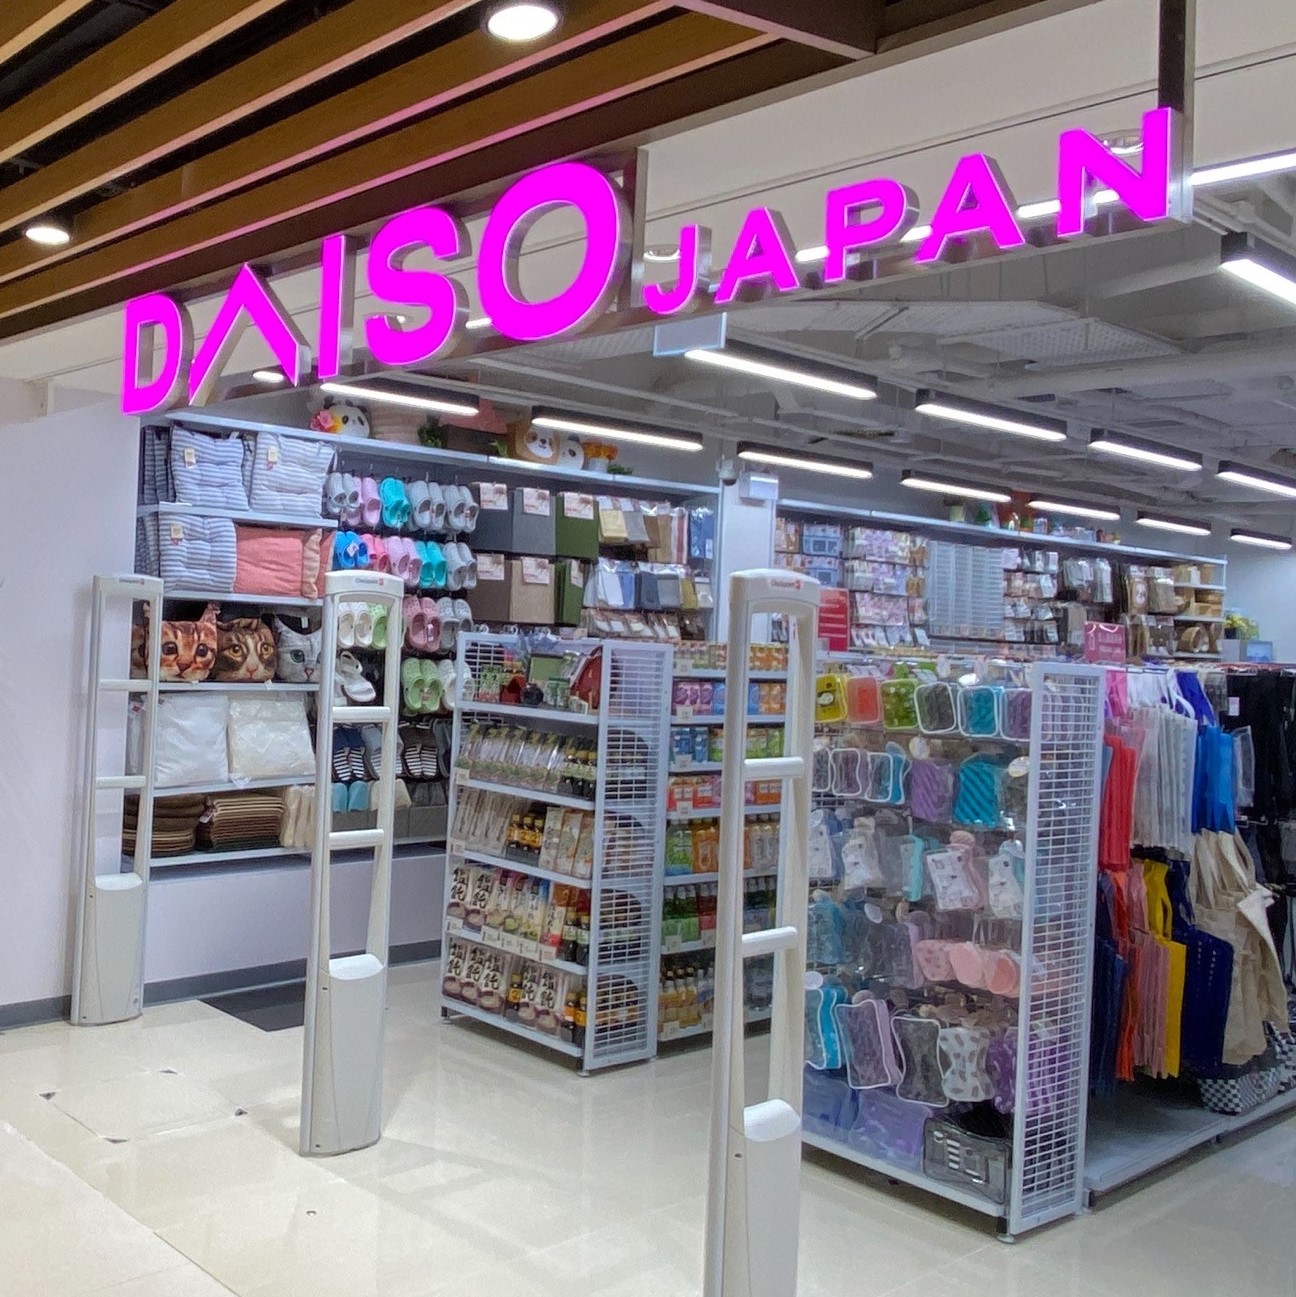 Daiso Japan 石塘坊店